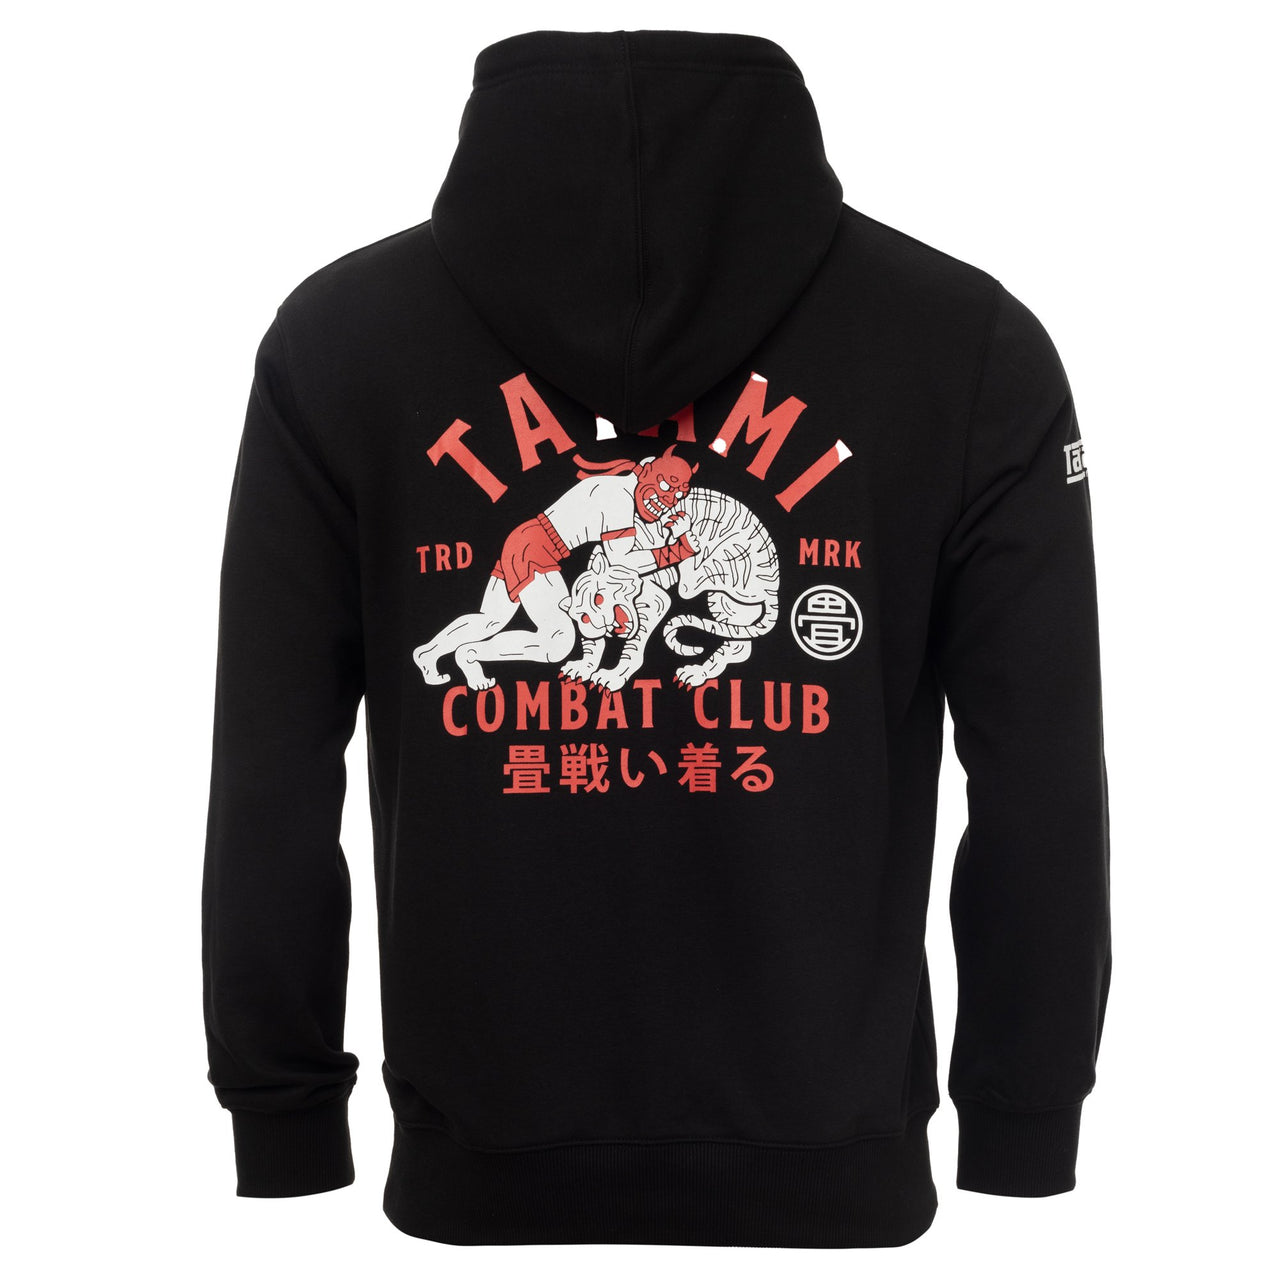 Tatami "Combat Club" Hoodie - Black